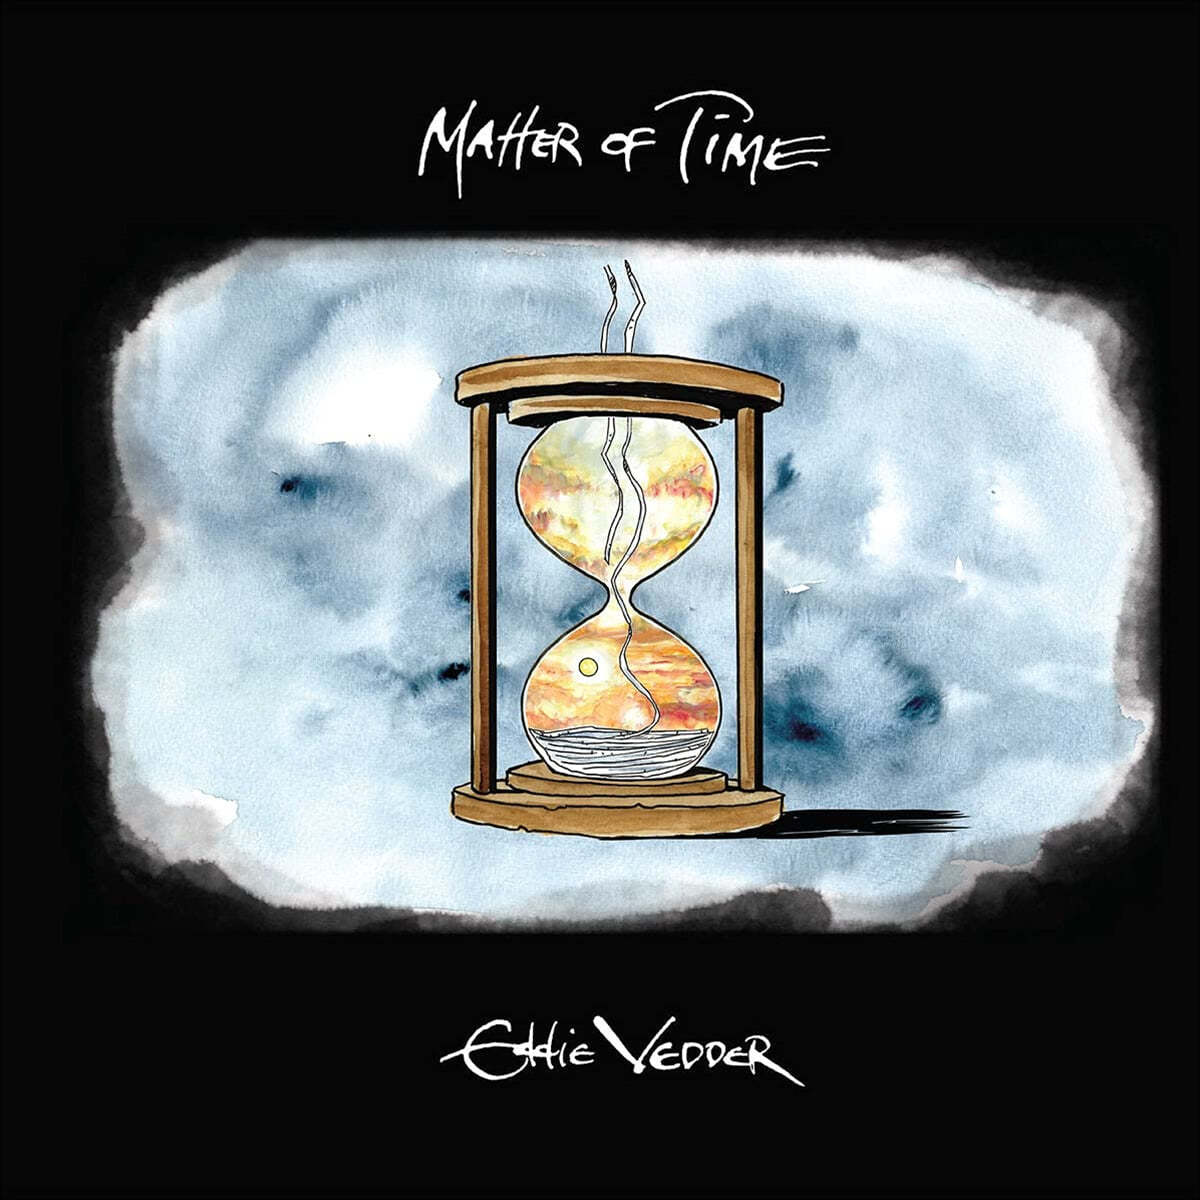 Eddie Vedder (에디 베더) - Matter Of Time / Say Hi [7인치 싱글 Vinyl] 